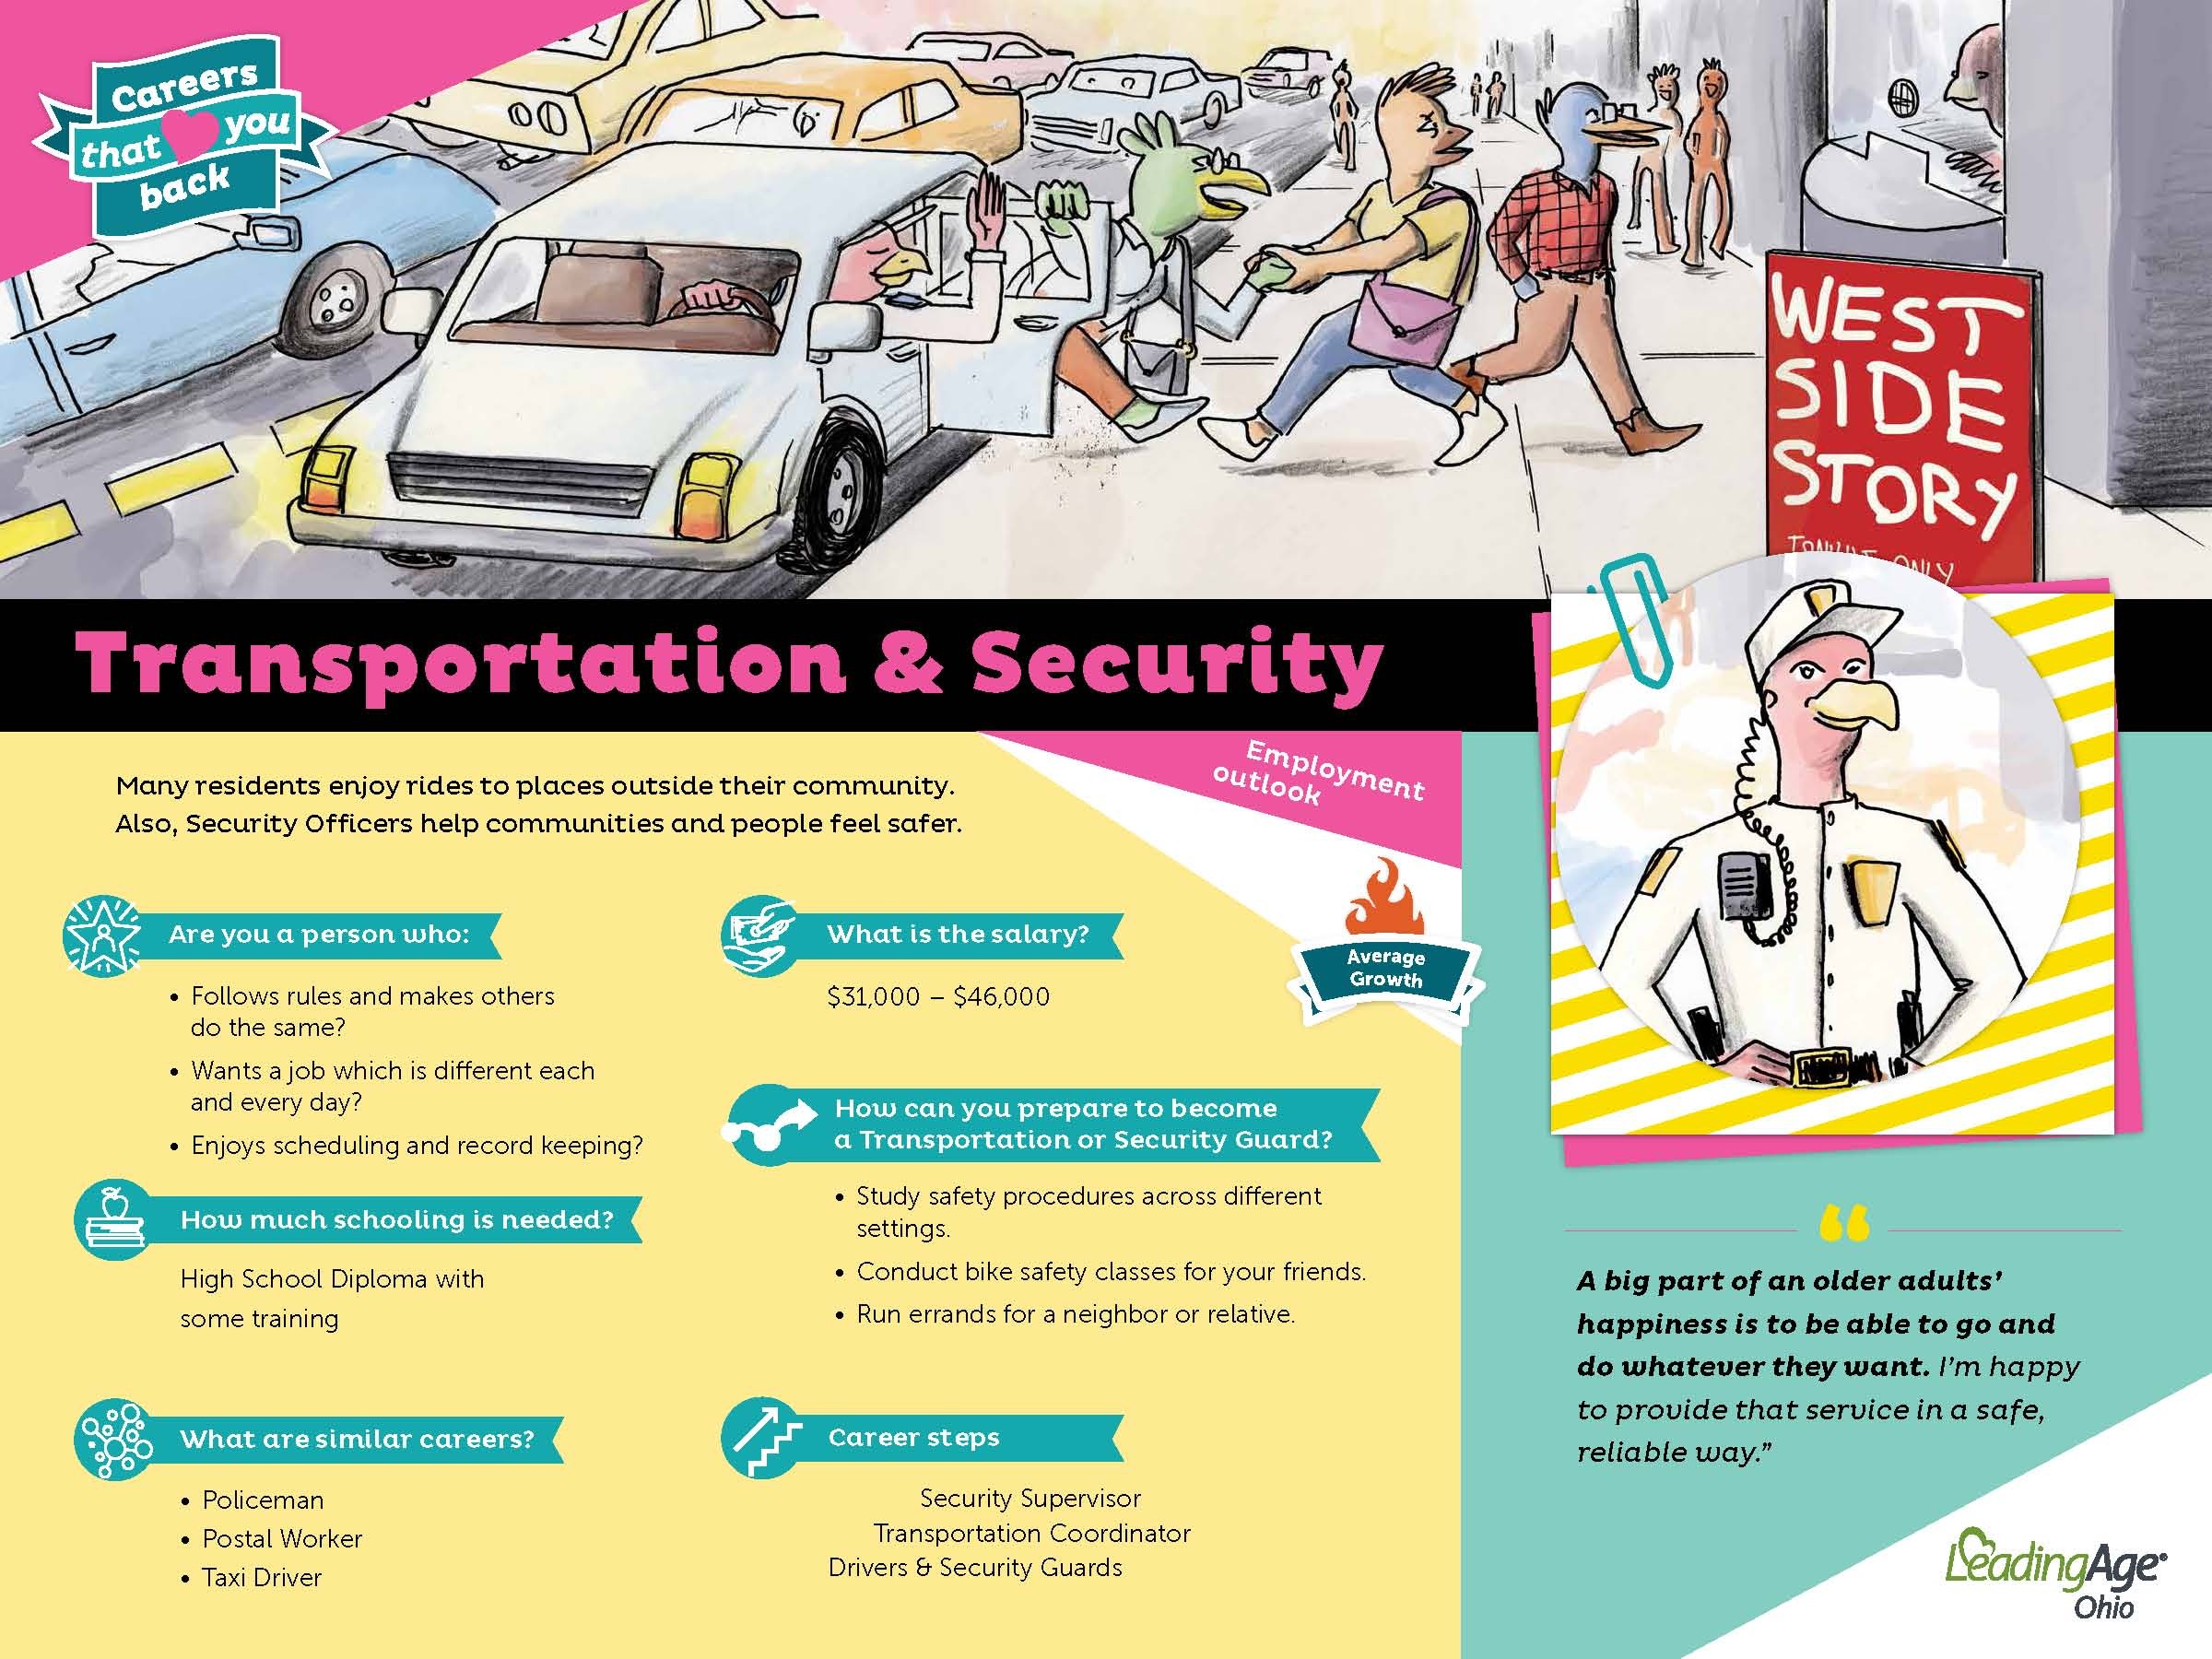 Transportation & Security